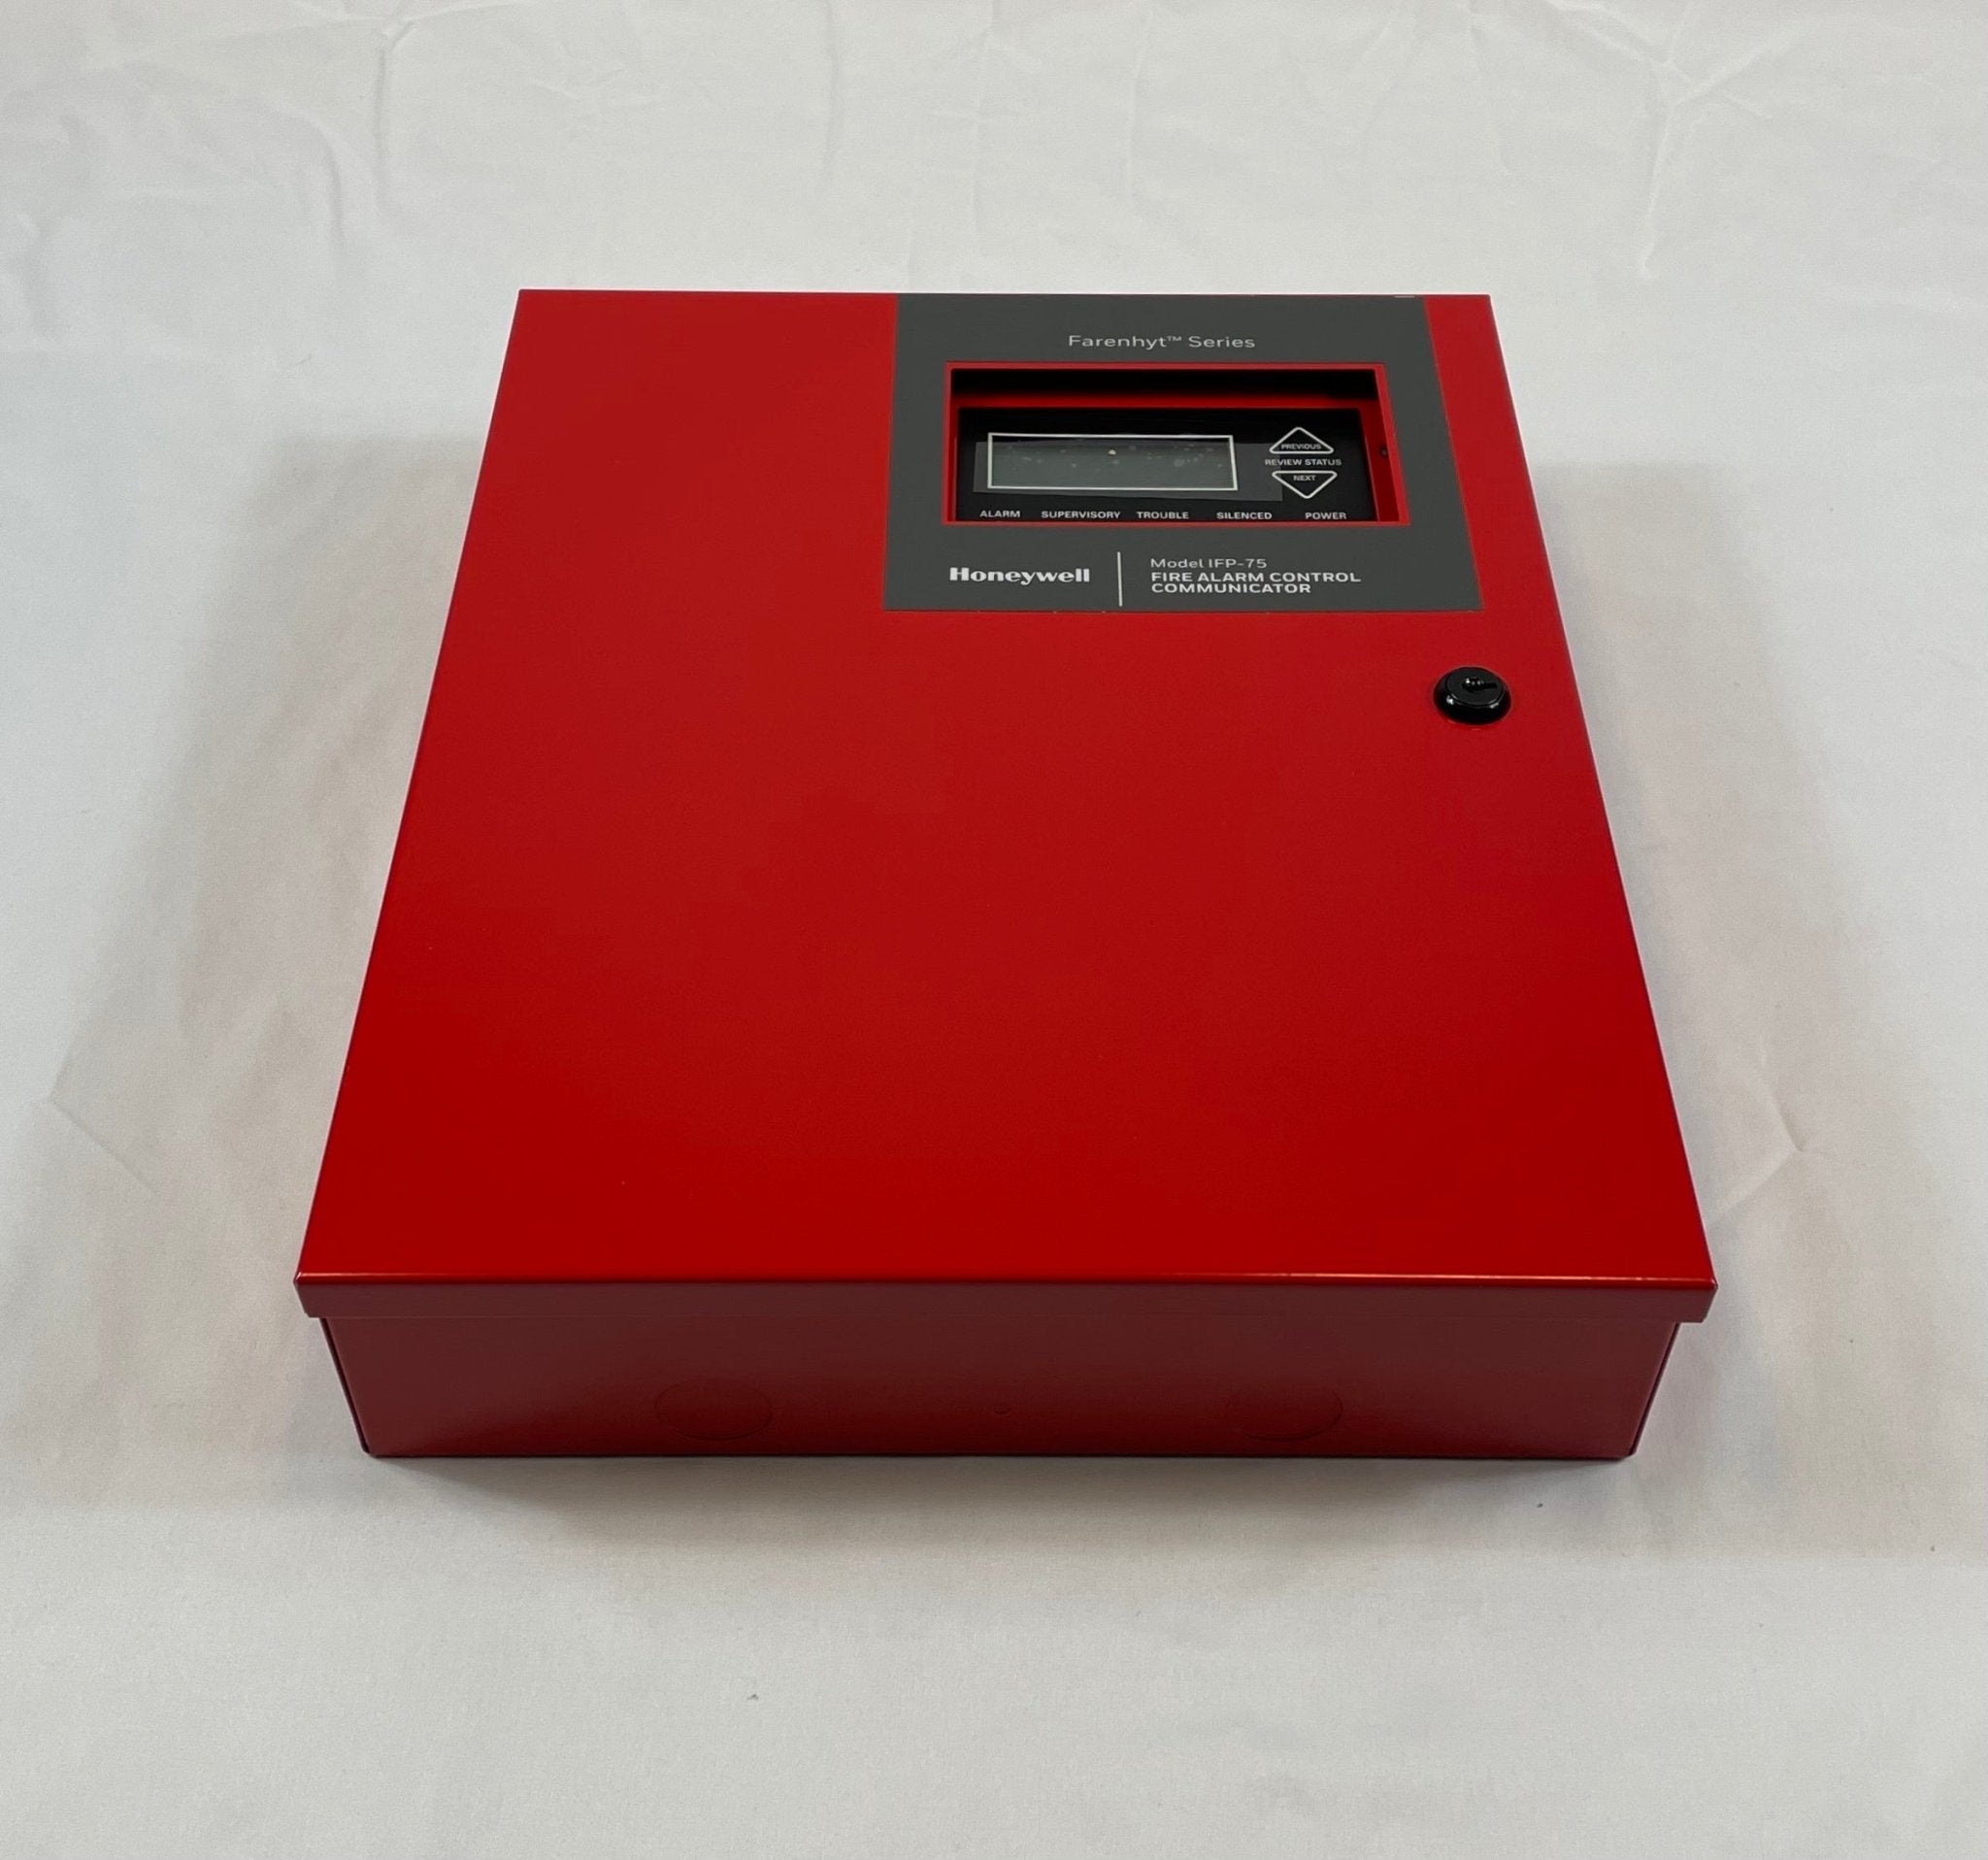 Farenhyt IFP-75 - The Fire Alarm Supplier